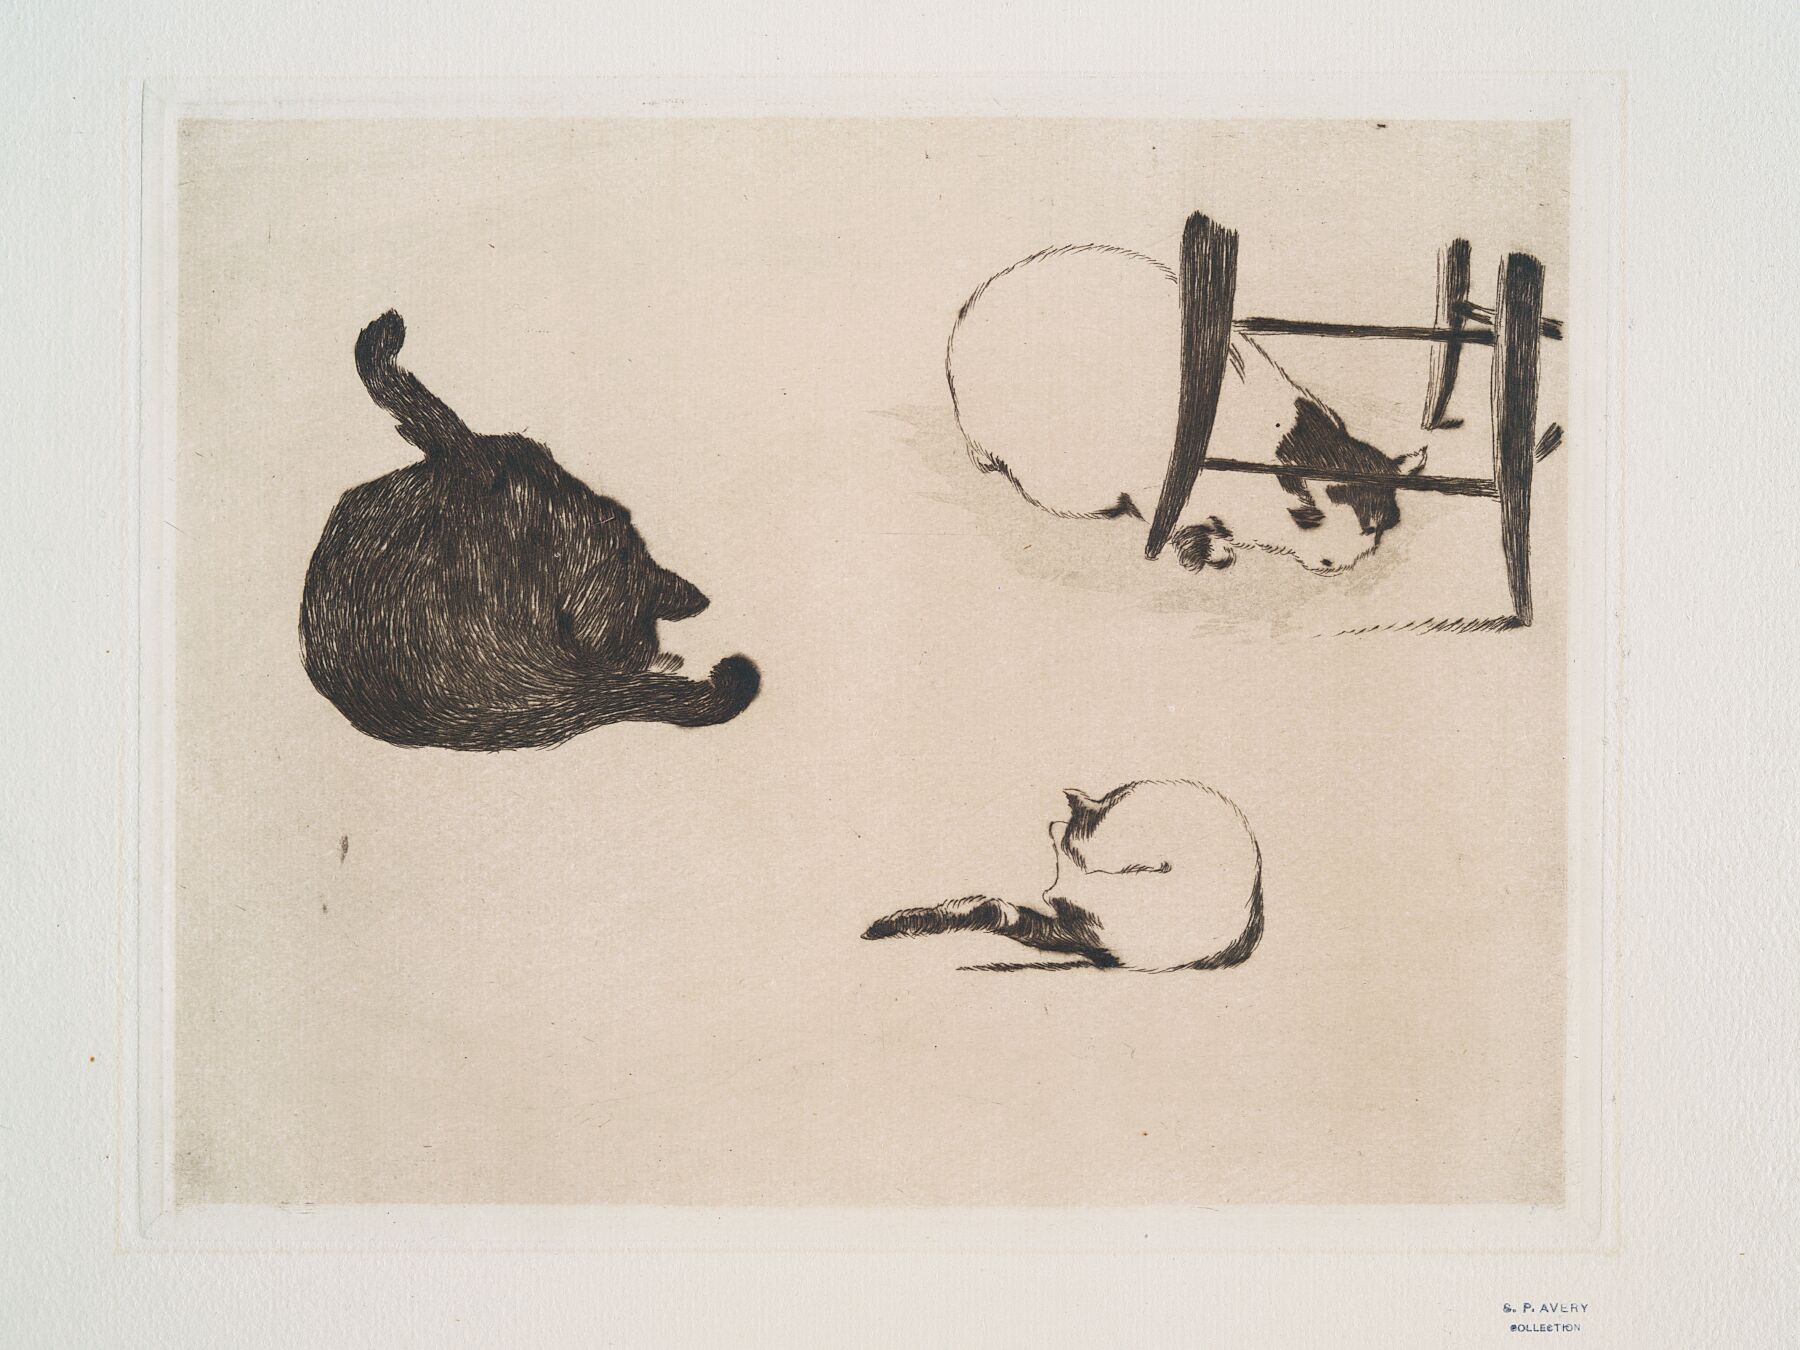 Les Chats by Édouard Manet - 1869